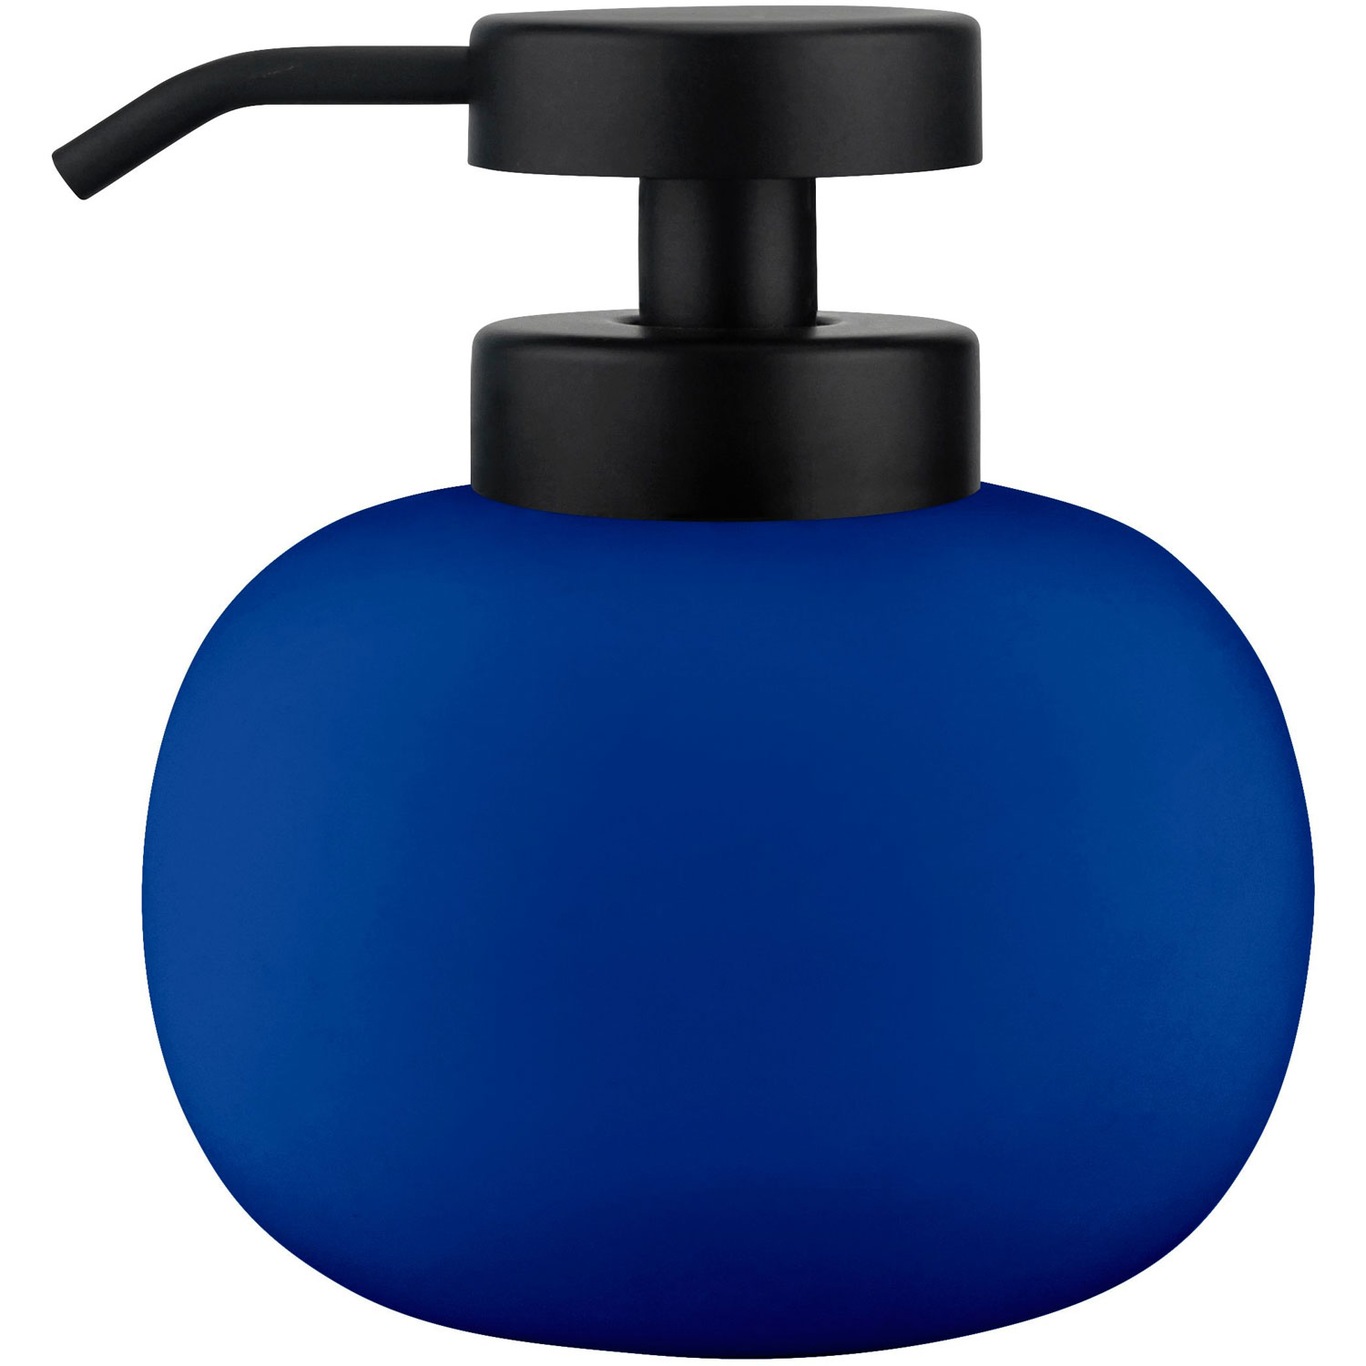 Lotus Soap Dispenser Low, Cobalt-blue